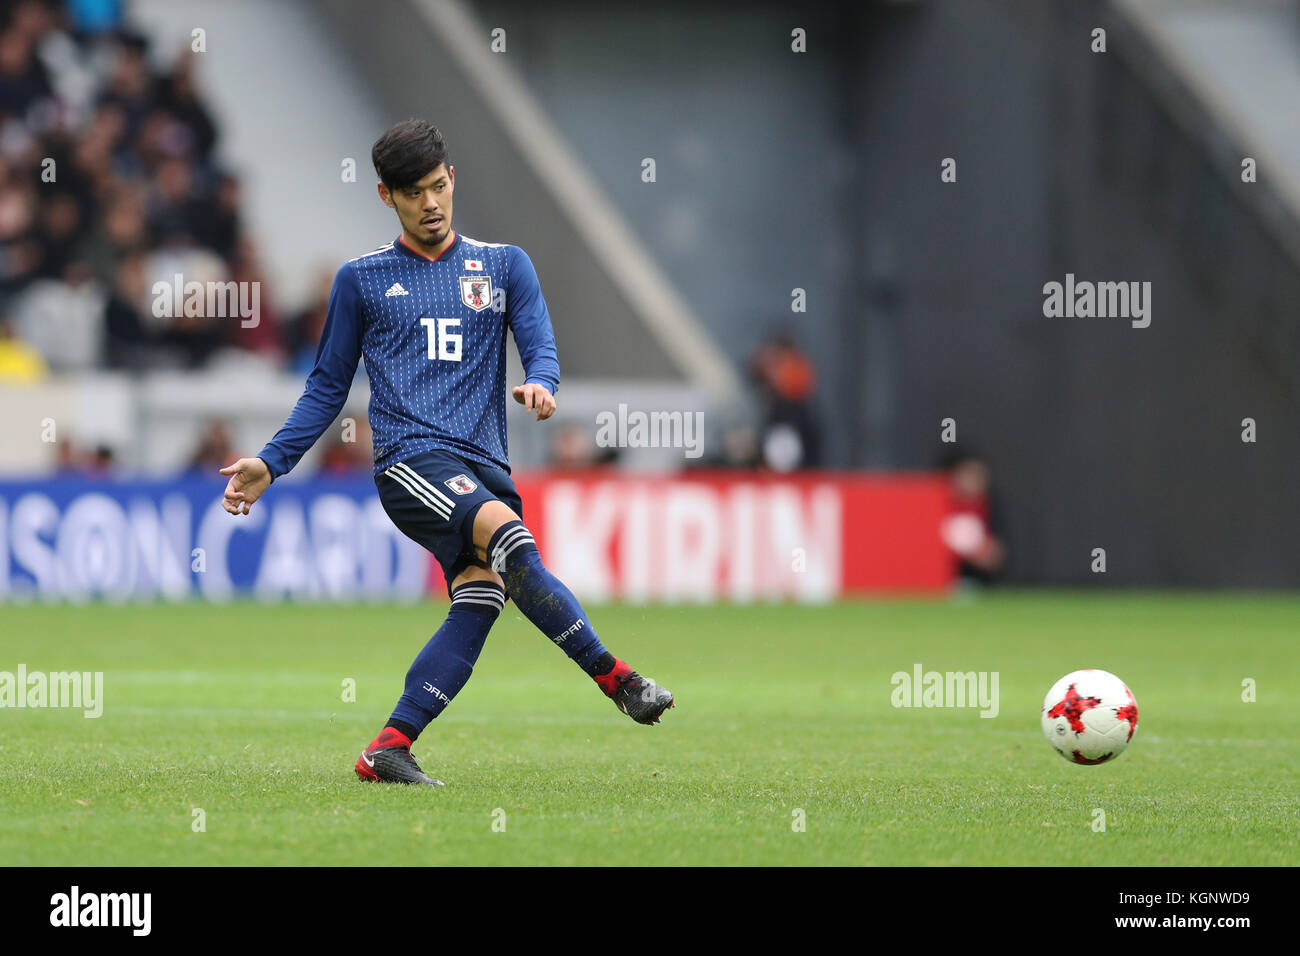 Hotaru Yamaguchi (JPN), NOVEMBER 10, 2017 - Football/Soccer : Hotaru Yamaguchi at Stade Pierre-Mauroy in Villeneuve-d'Ascq, Lille, France, Credit: AFLO/Alamy Live News Stock Photo